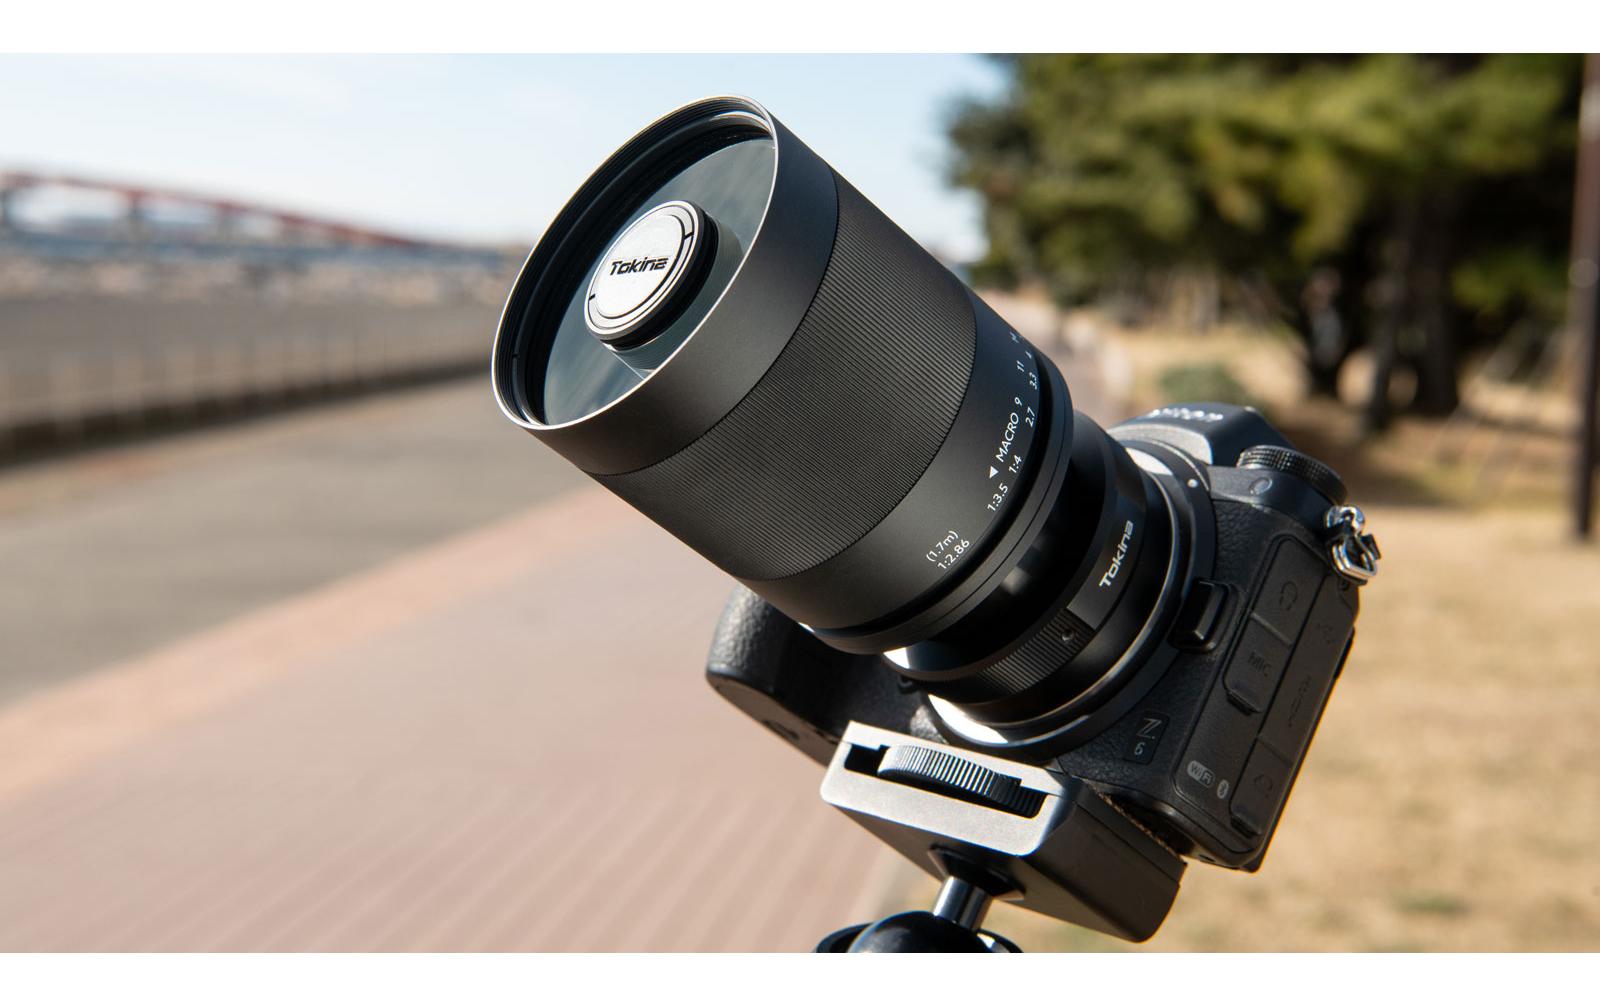 Tokina Festbrennweite SZ Super Tele 500 mm f/8 Reflex MF – Nikon Z